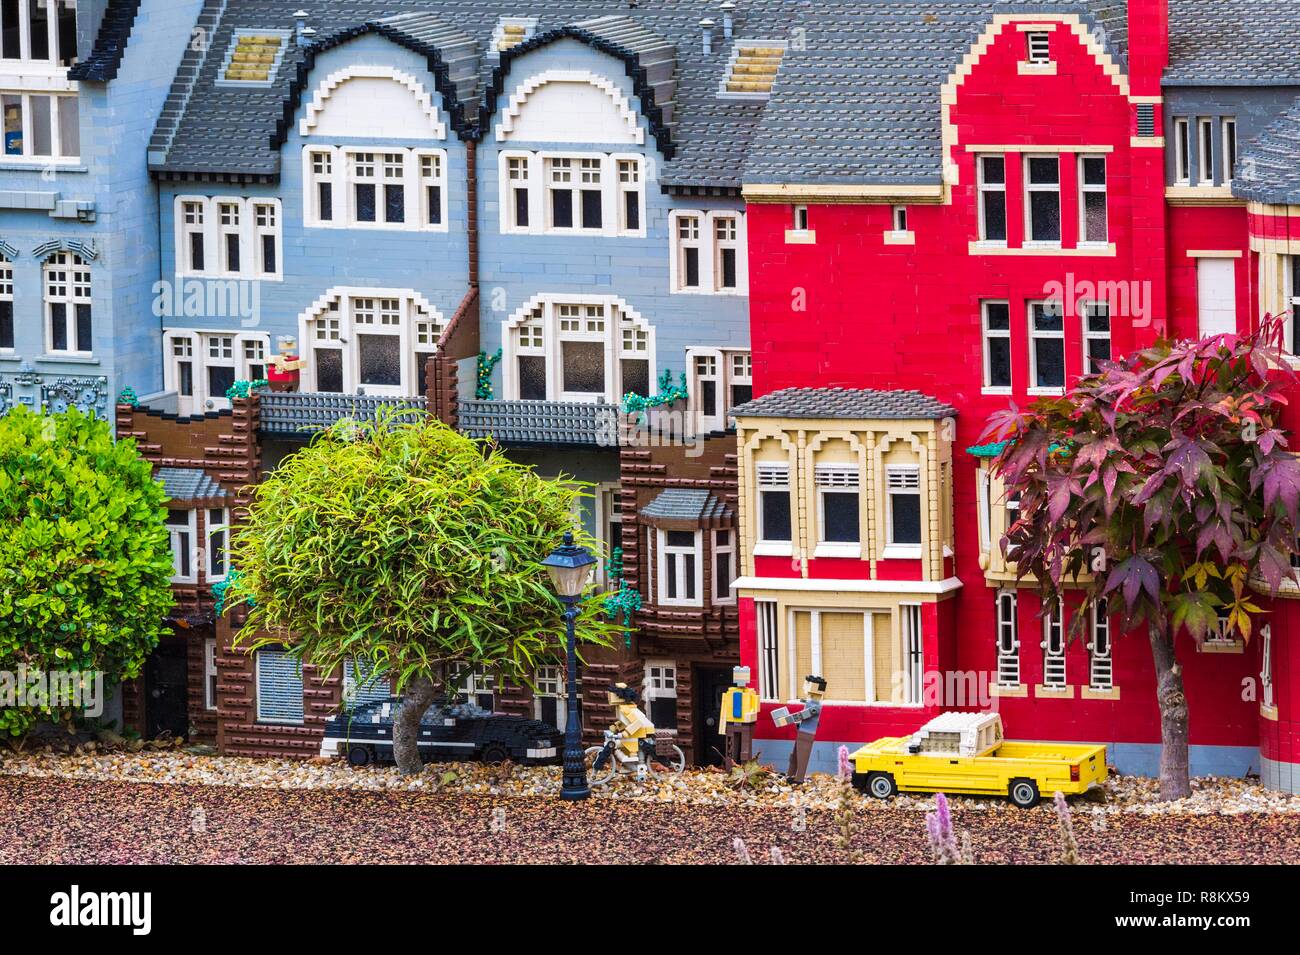 Dinamarca, Jutlandia, Billund, Legoland® Billund es el primer parque  Legoland establecido en 1968, cerca de la sede de la compañía LEGO® (el  término Lego se deriva del danés leg godt significado juega